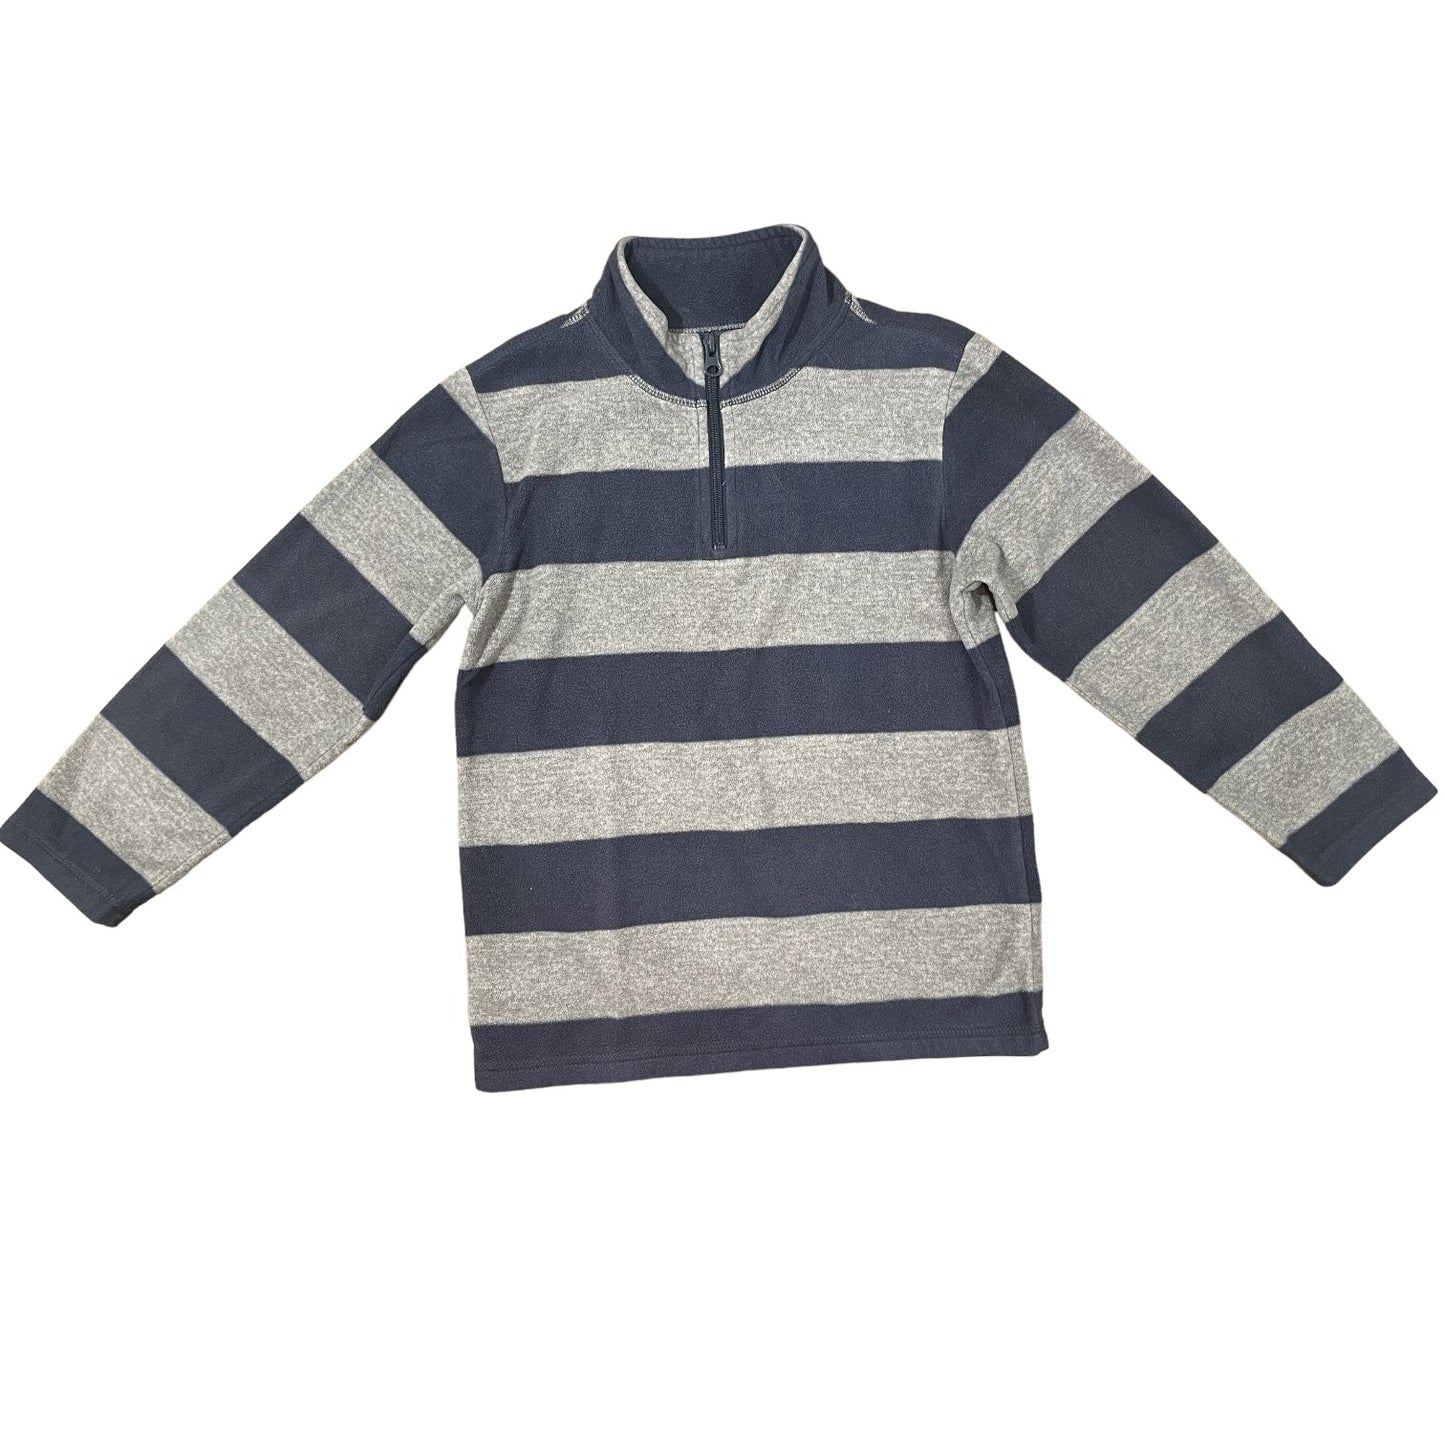 Oshkosh B'Gosh Boys Fleece Sweater size 7